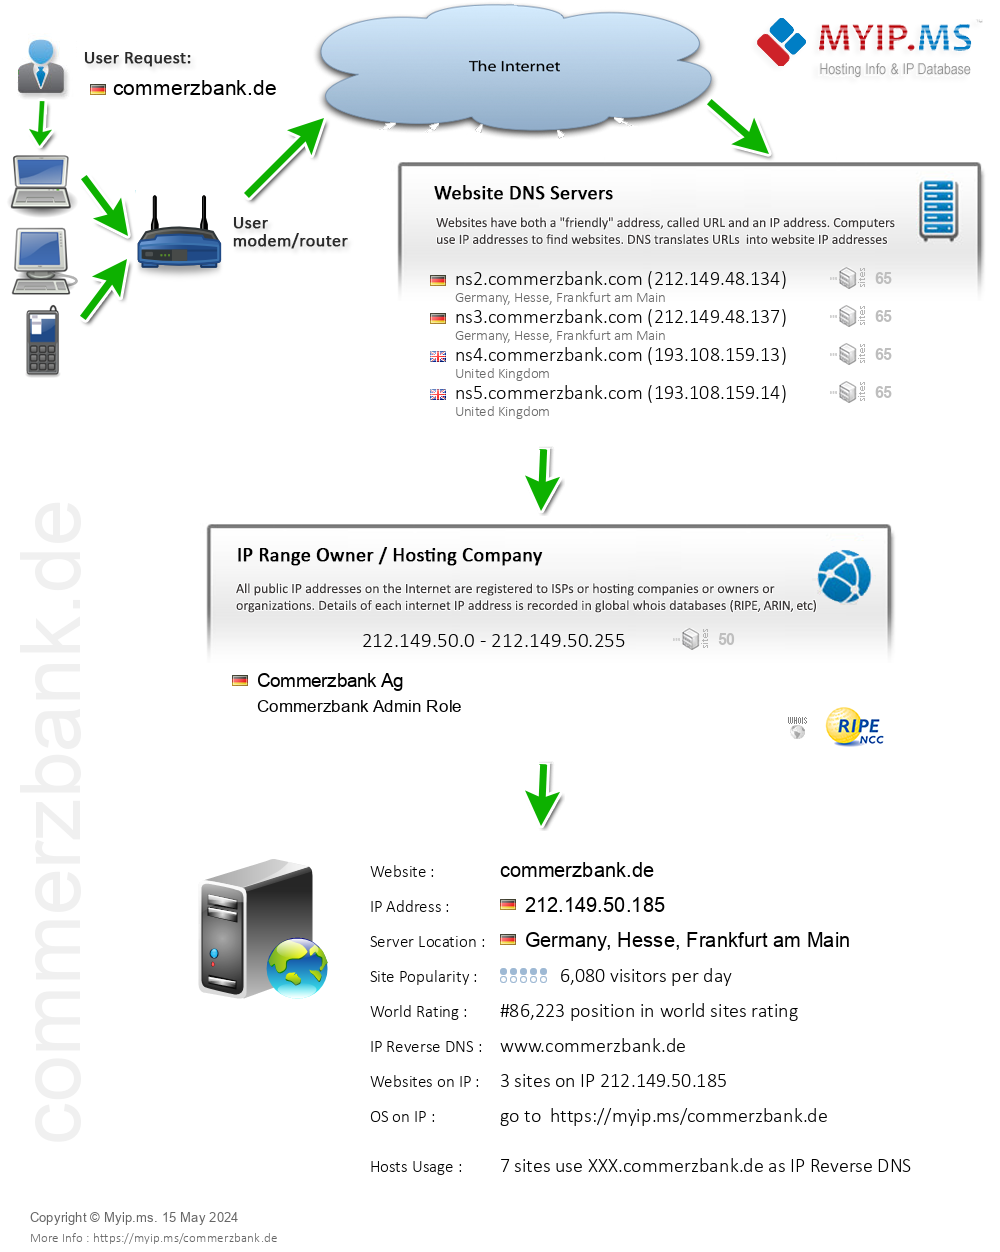 Commerzbank.de - Website Hosting Visual IP Diagram